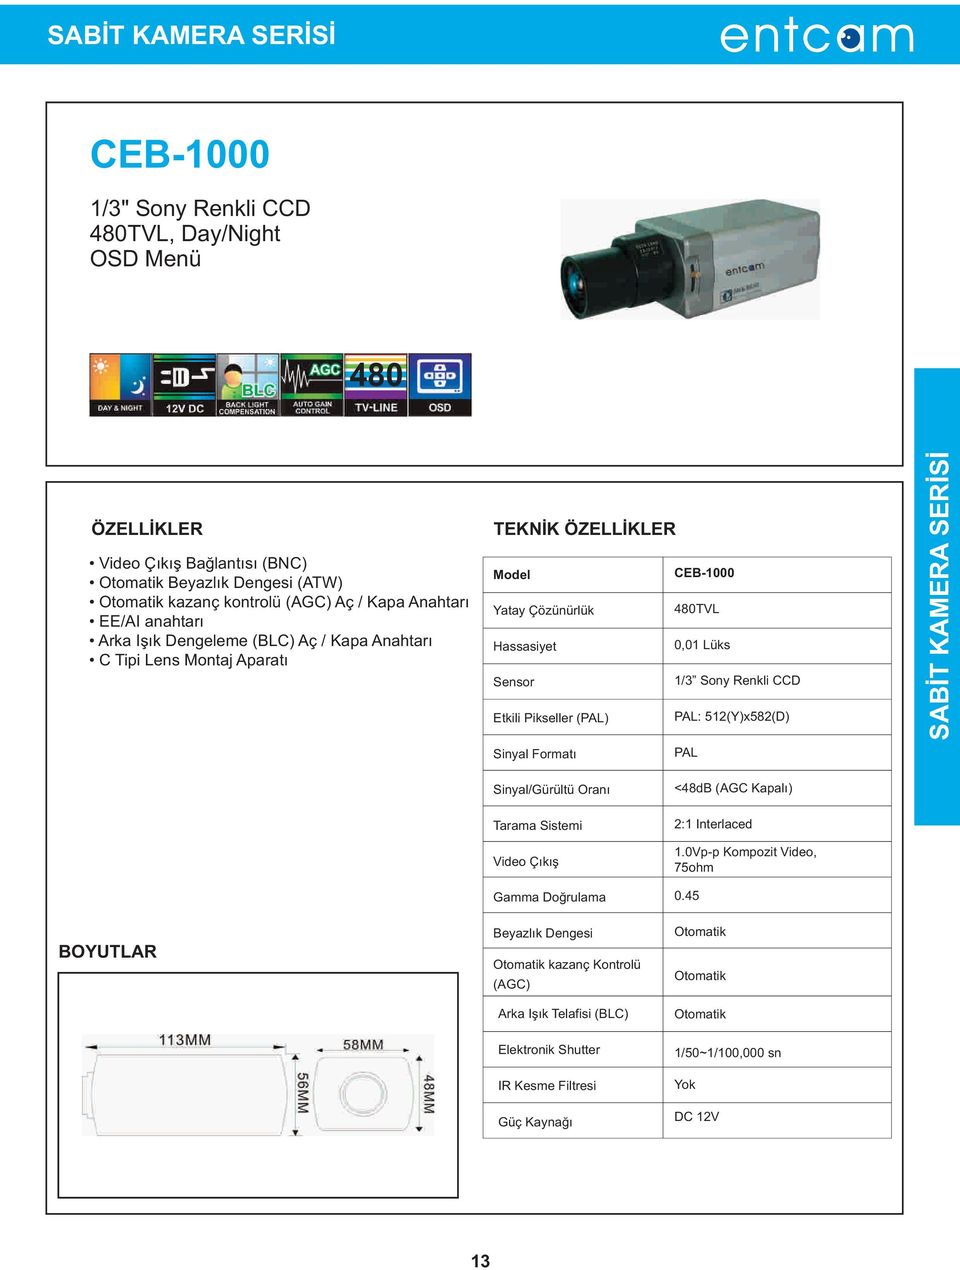 Sony Renkli CCD Etkili Pikseller (PAL) PAL: 512(Y)x582(D) Sinyal Formatý PAL SABÝT KAMERA SERÝSÝ Sinyal/Gürültü Oraný Tarama Sistemi Video Çýkýþ Gamma Doðrulama Beyazlýk Dengesi Otomatik kazanç